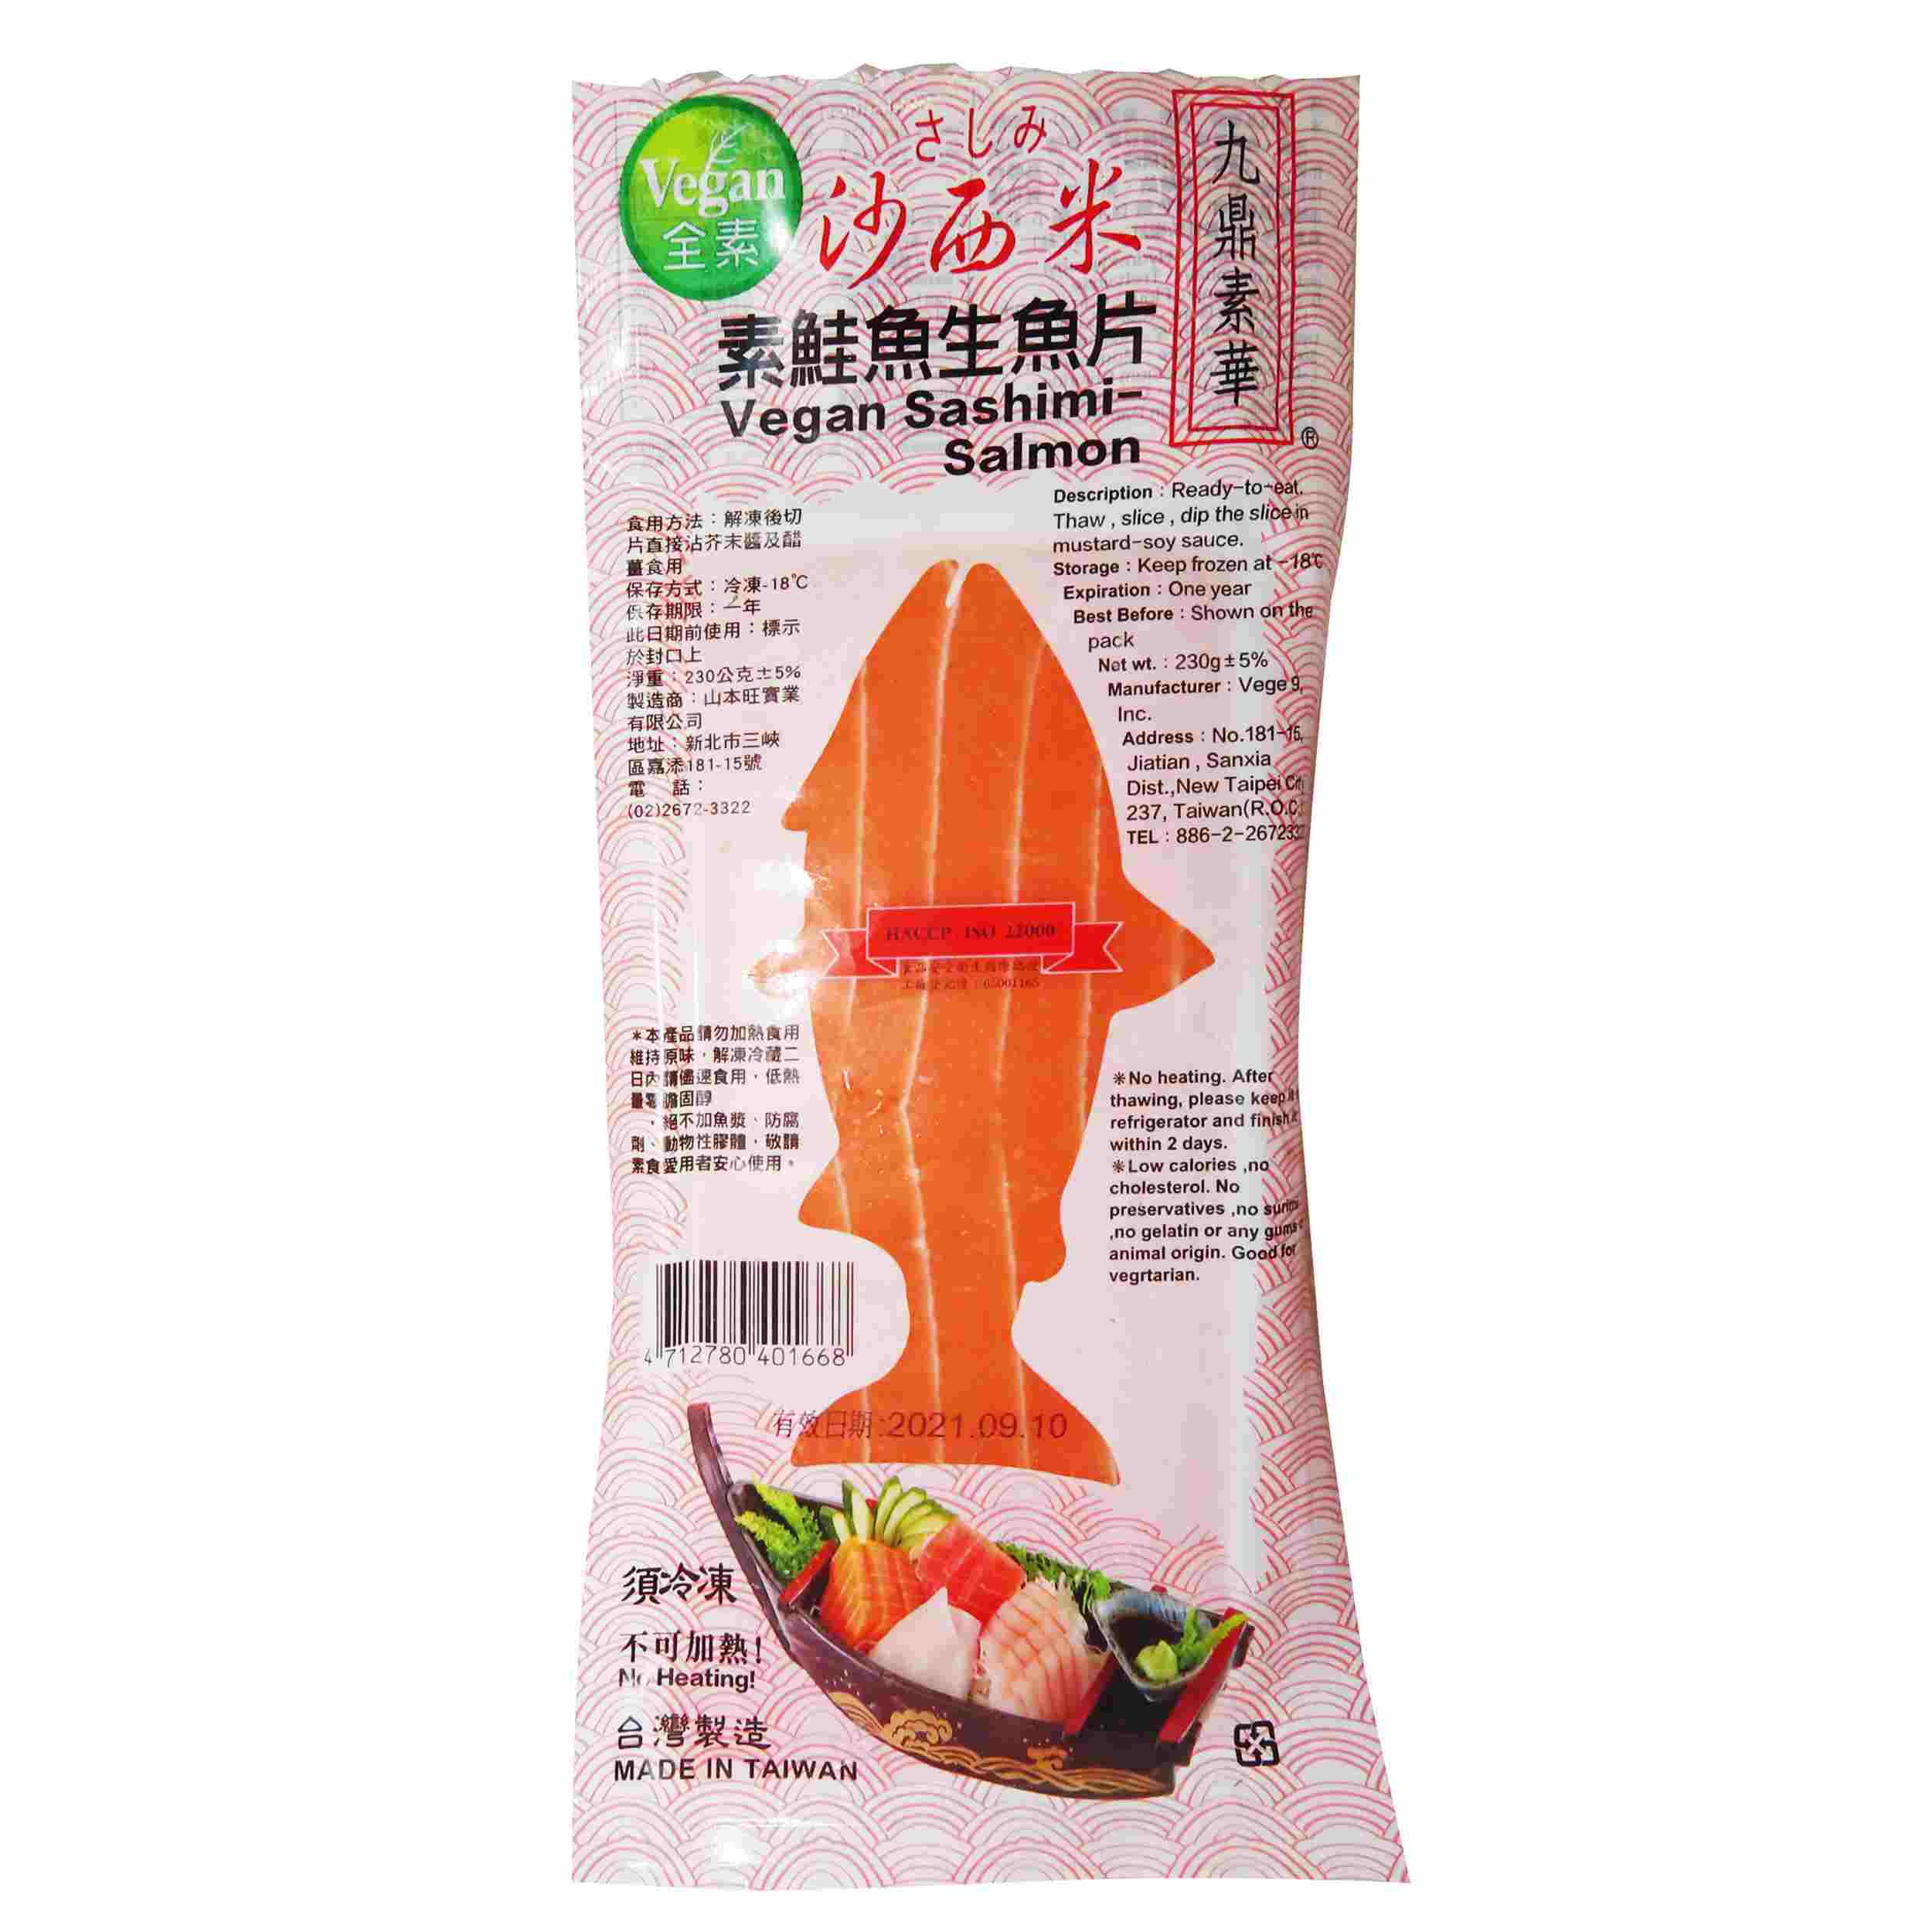 Image Veggie Sashimi Salmon 九鼎华-素鲑鱼生鱼片 220grams